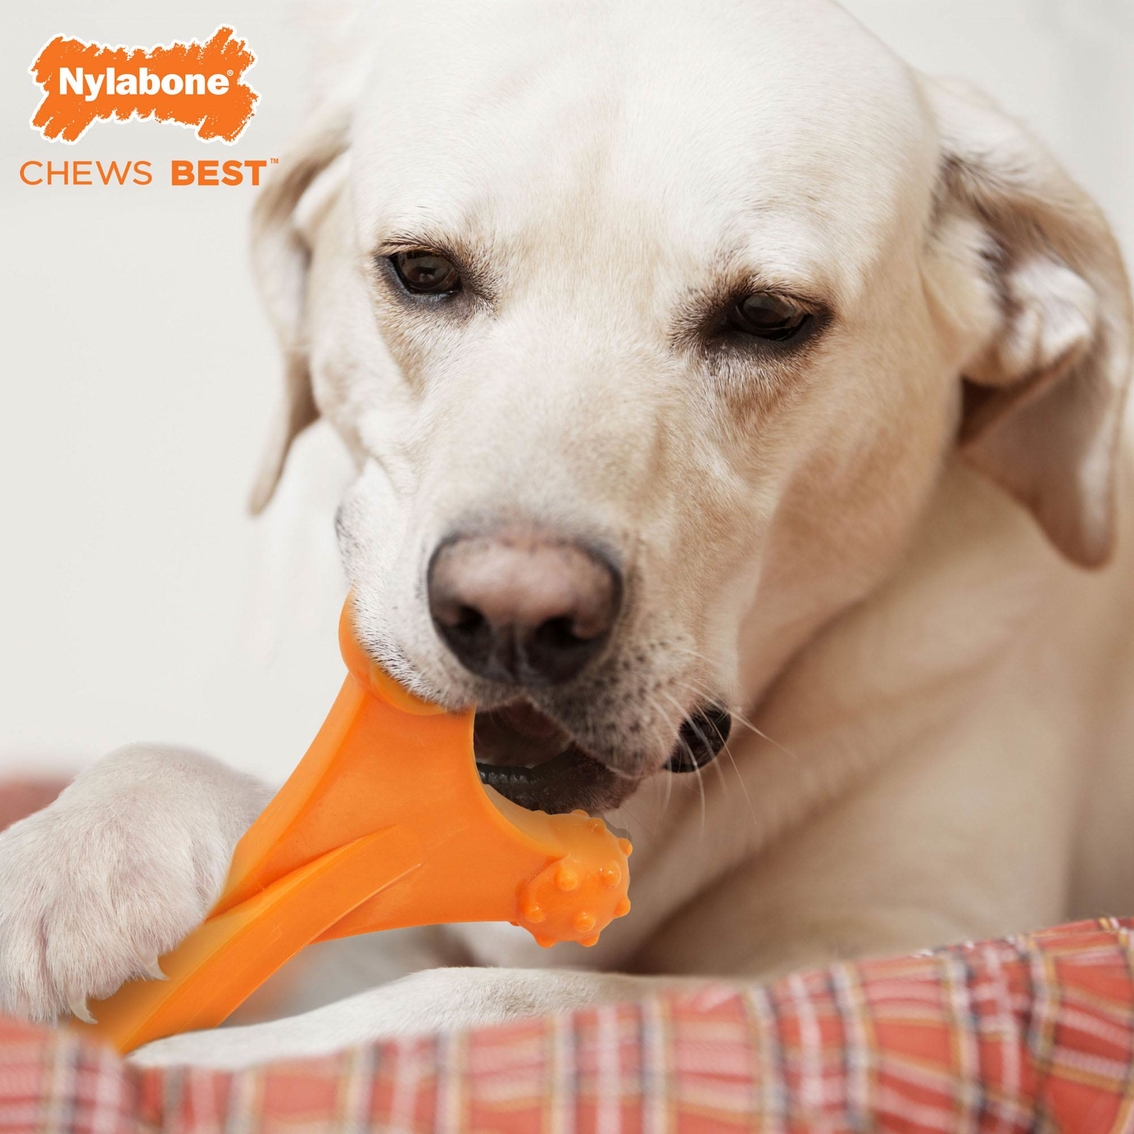 Nylabone Power Chew Dura Chew Axis Bone Bacon Flavor Dog Chew Toy - Image 3 of 3